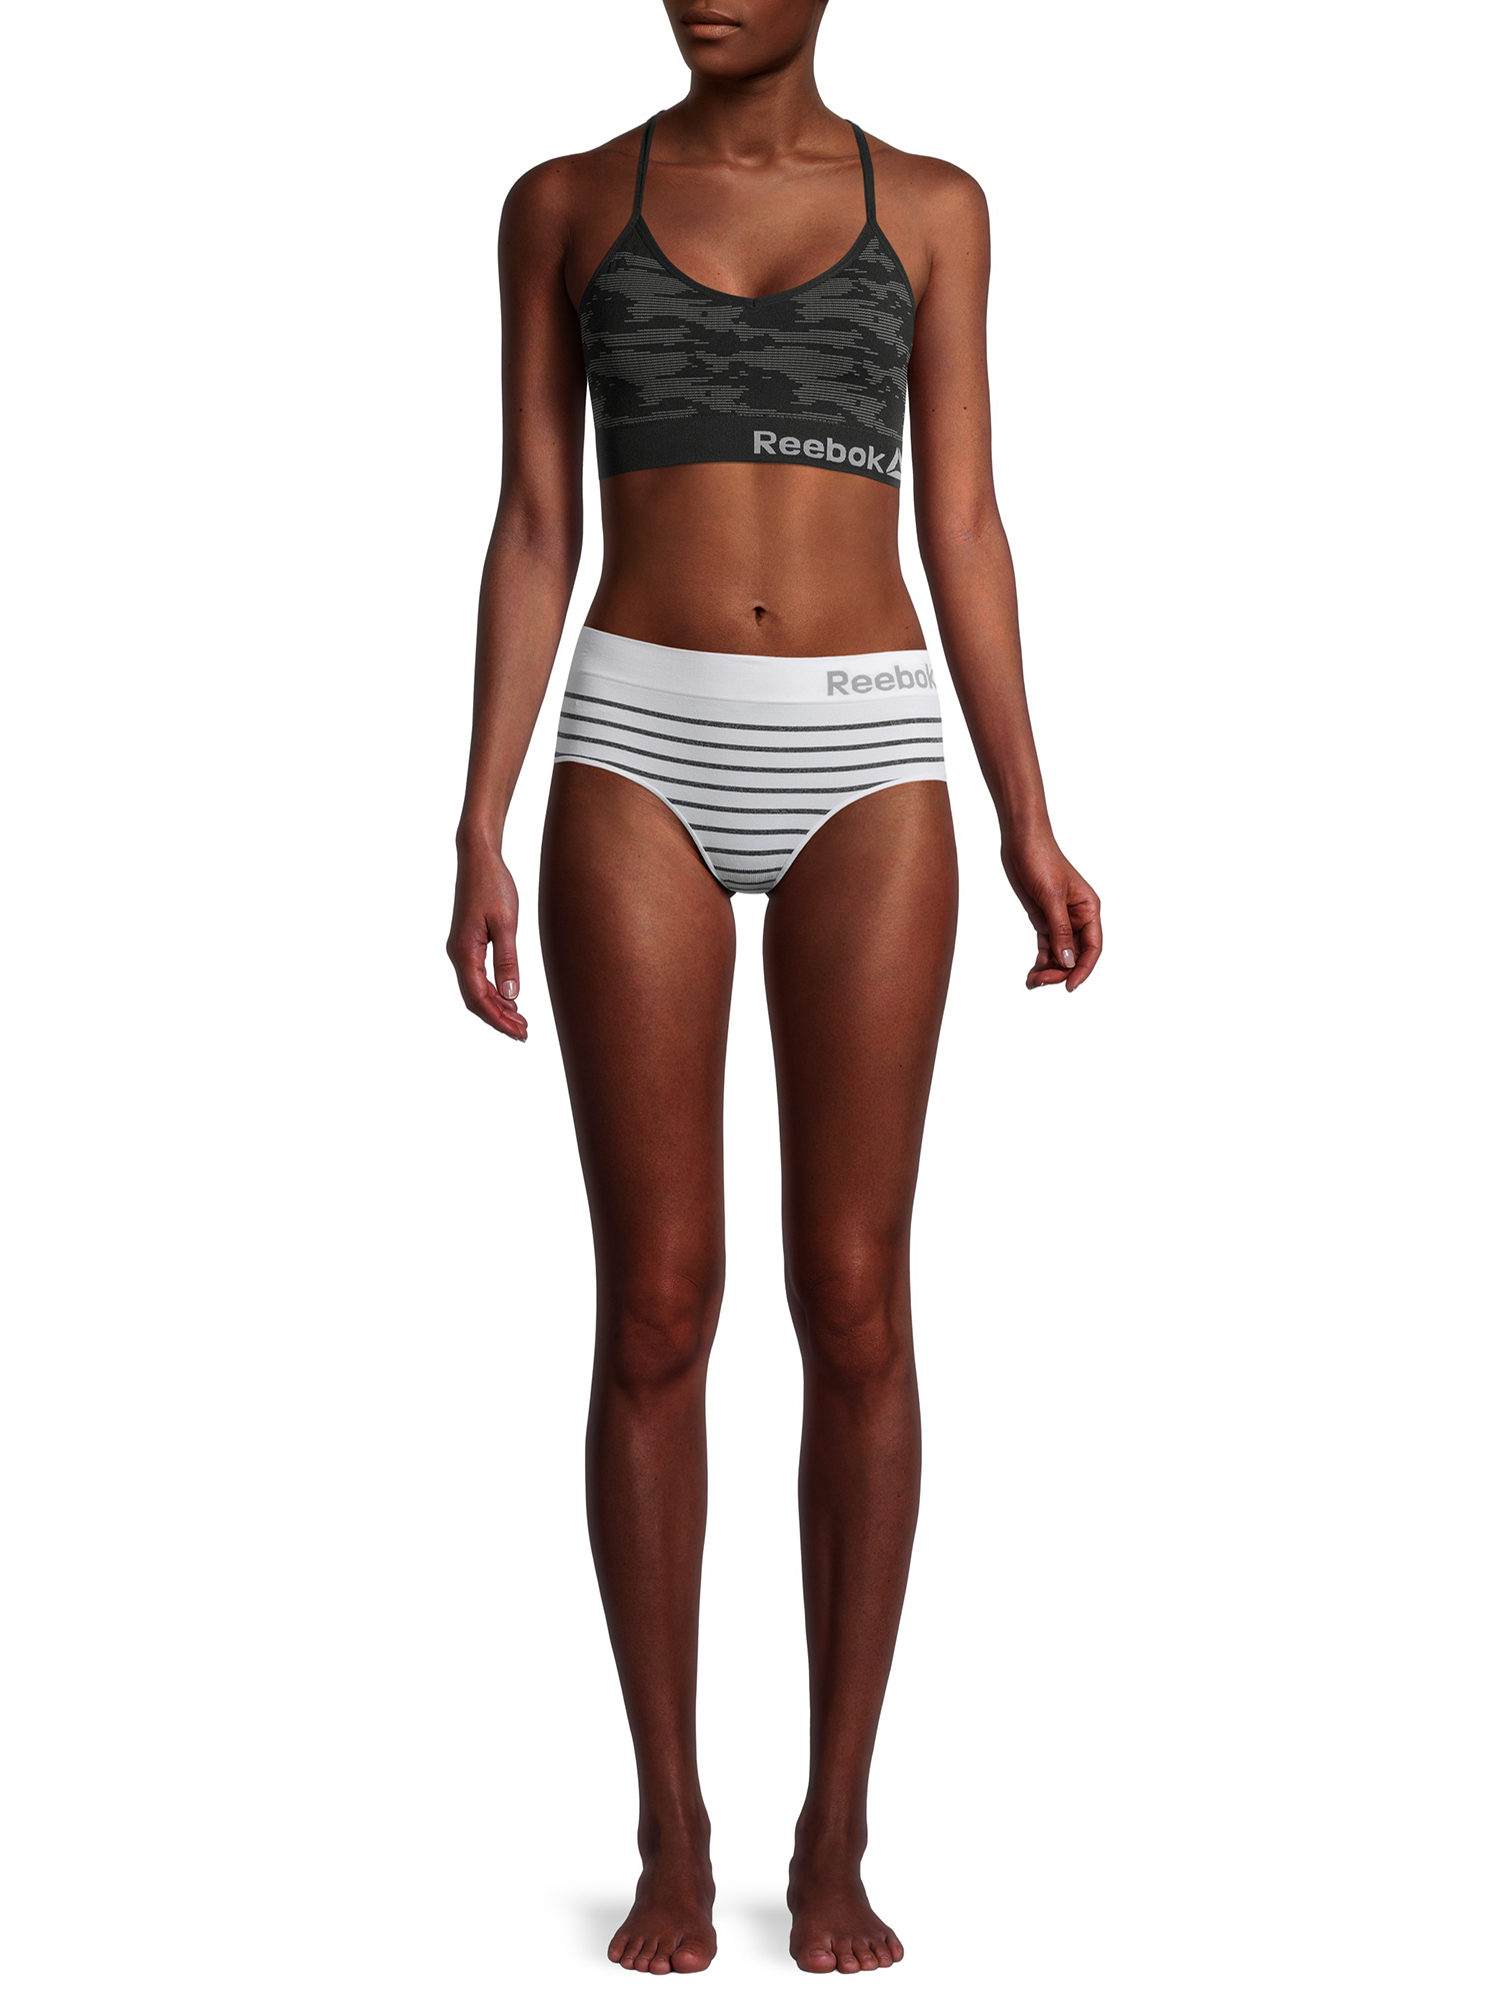 Reebok Women's Underwear Seamless Hipster Panties, 4-Pack - image 1 of 10